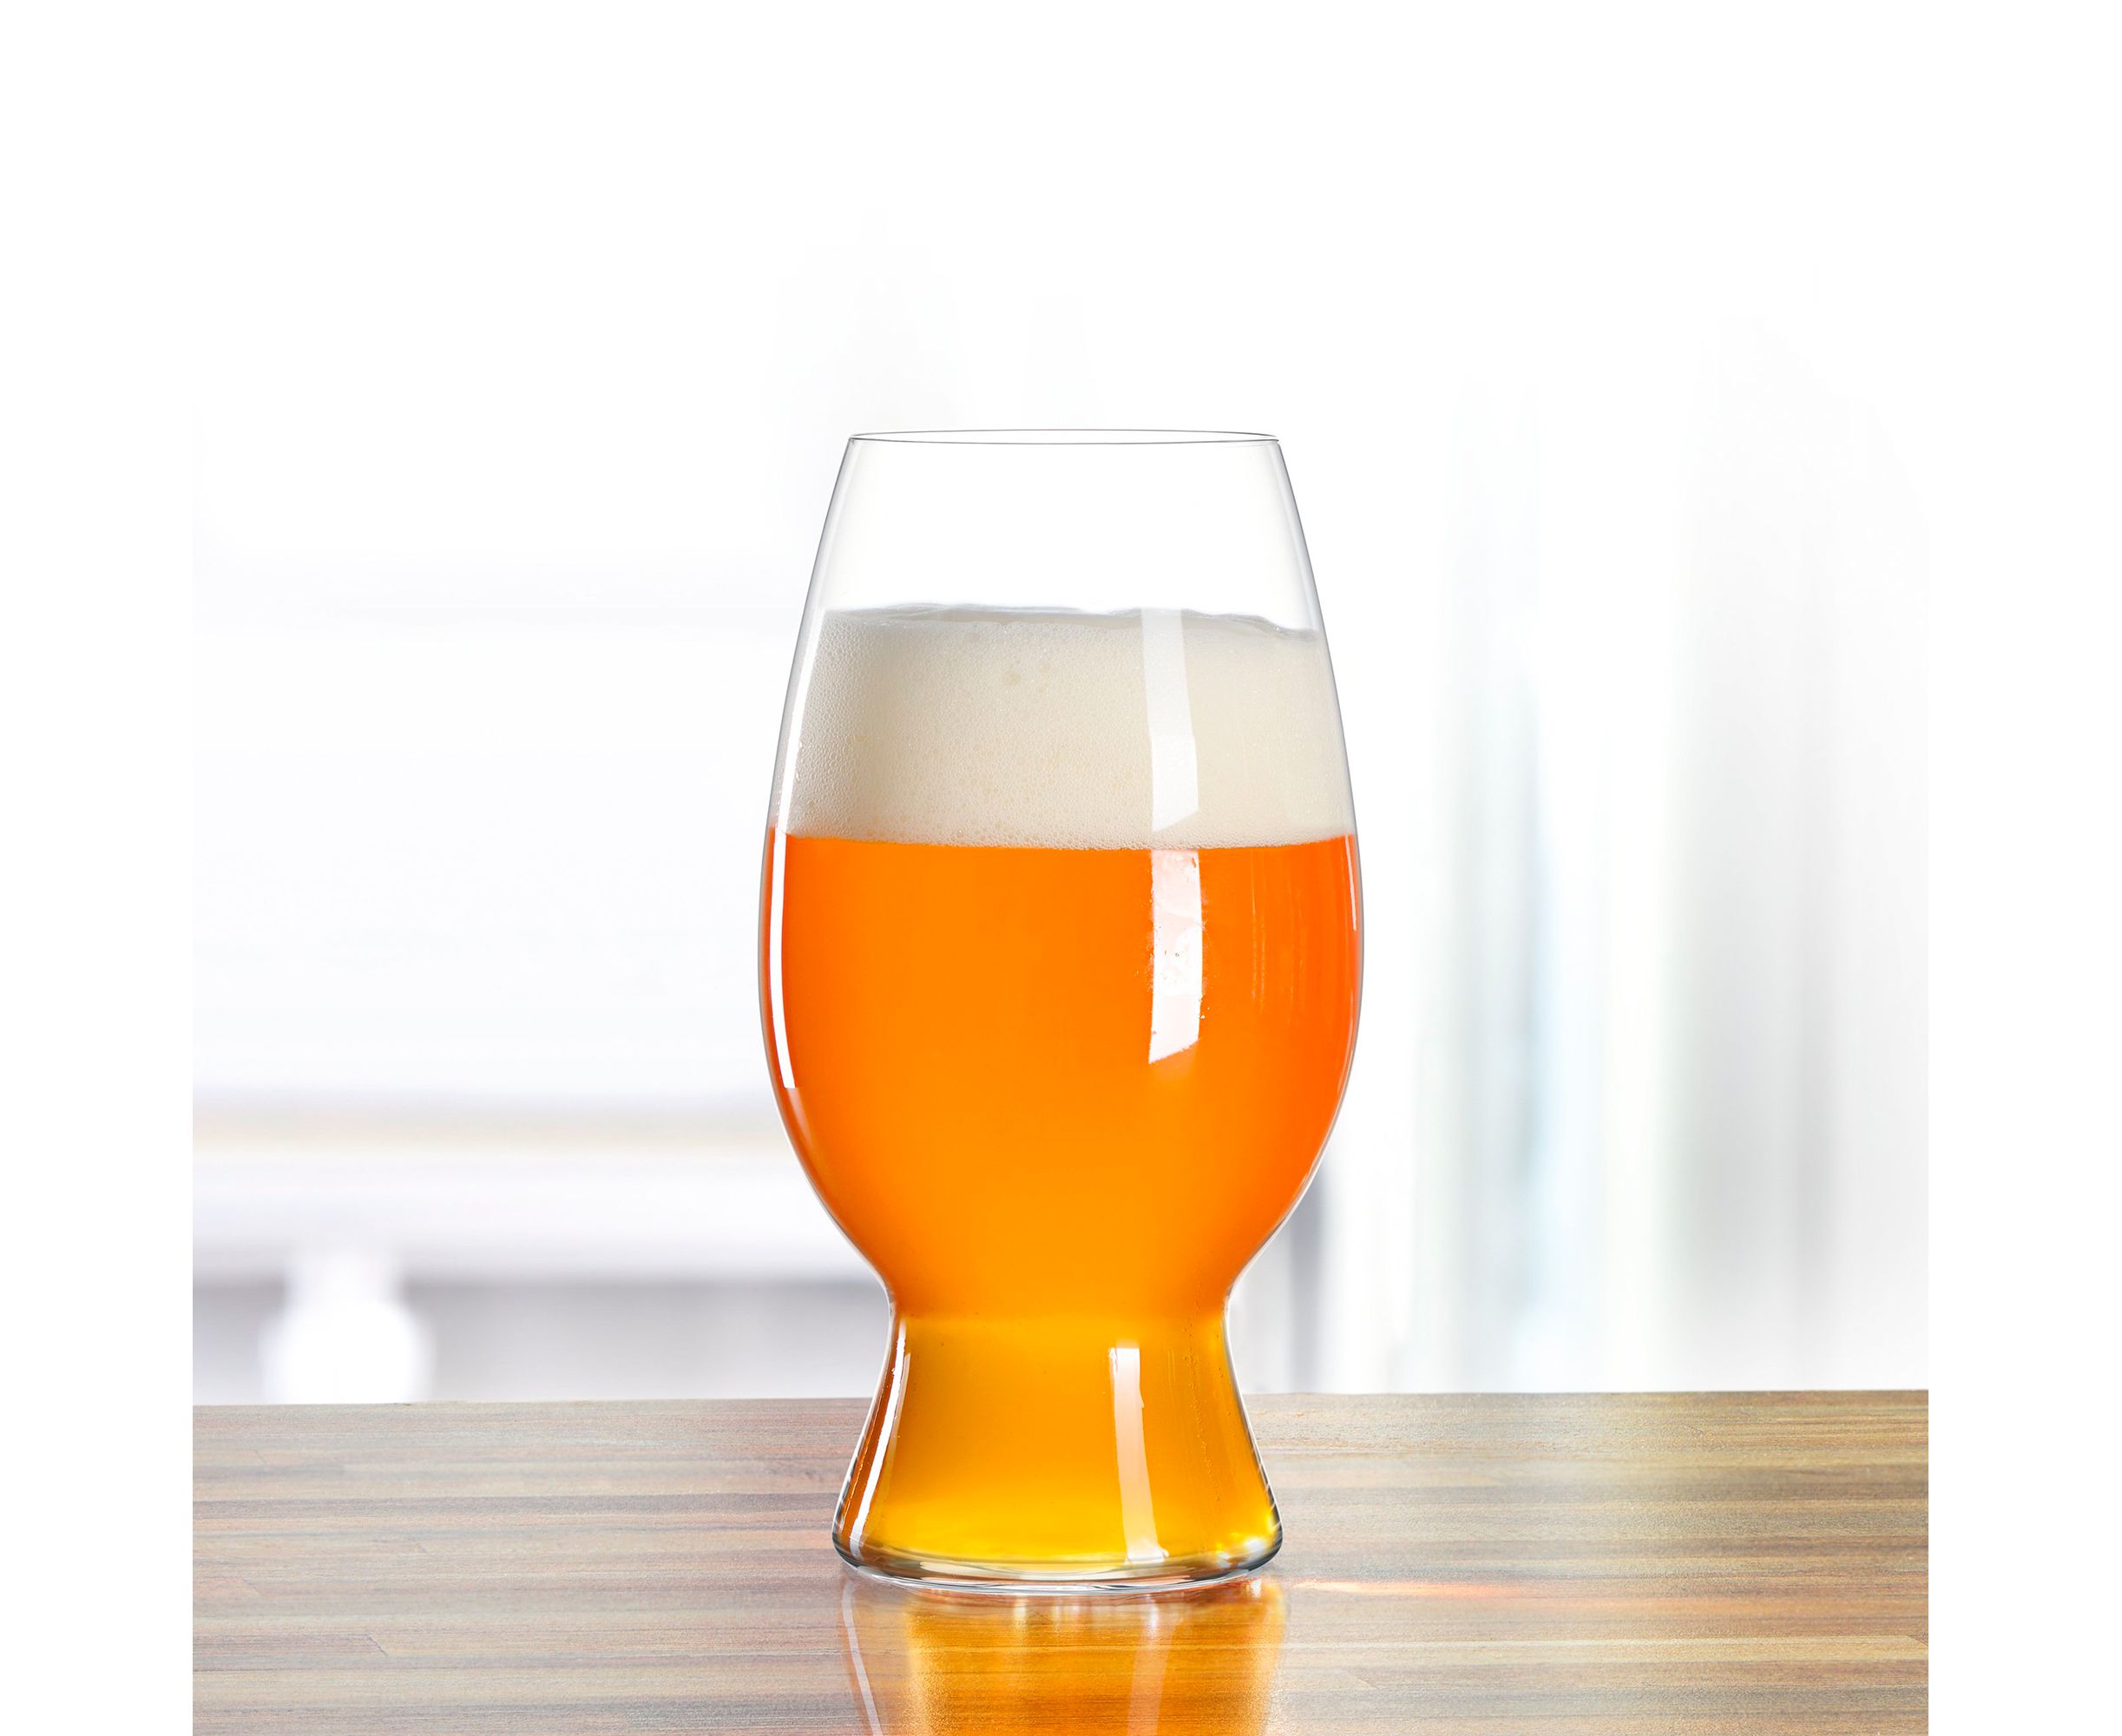 Пивные стаканы купить. Spiegelau Craft Beer Glasses tasting Kit. Spiegelau набор бокалов Craft Beer Glasses tasting Kit 4991693 3 шт.. Пивные бокалы Spiegelau.